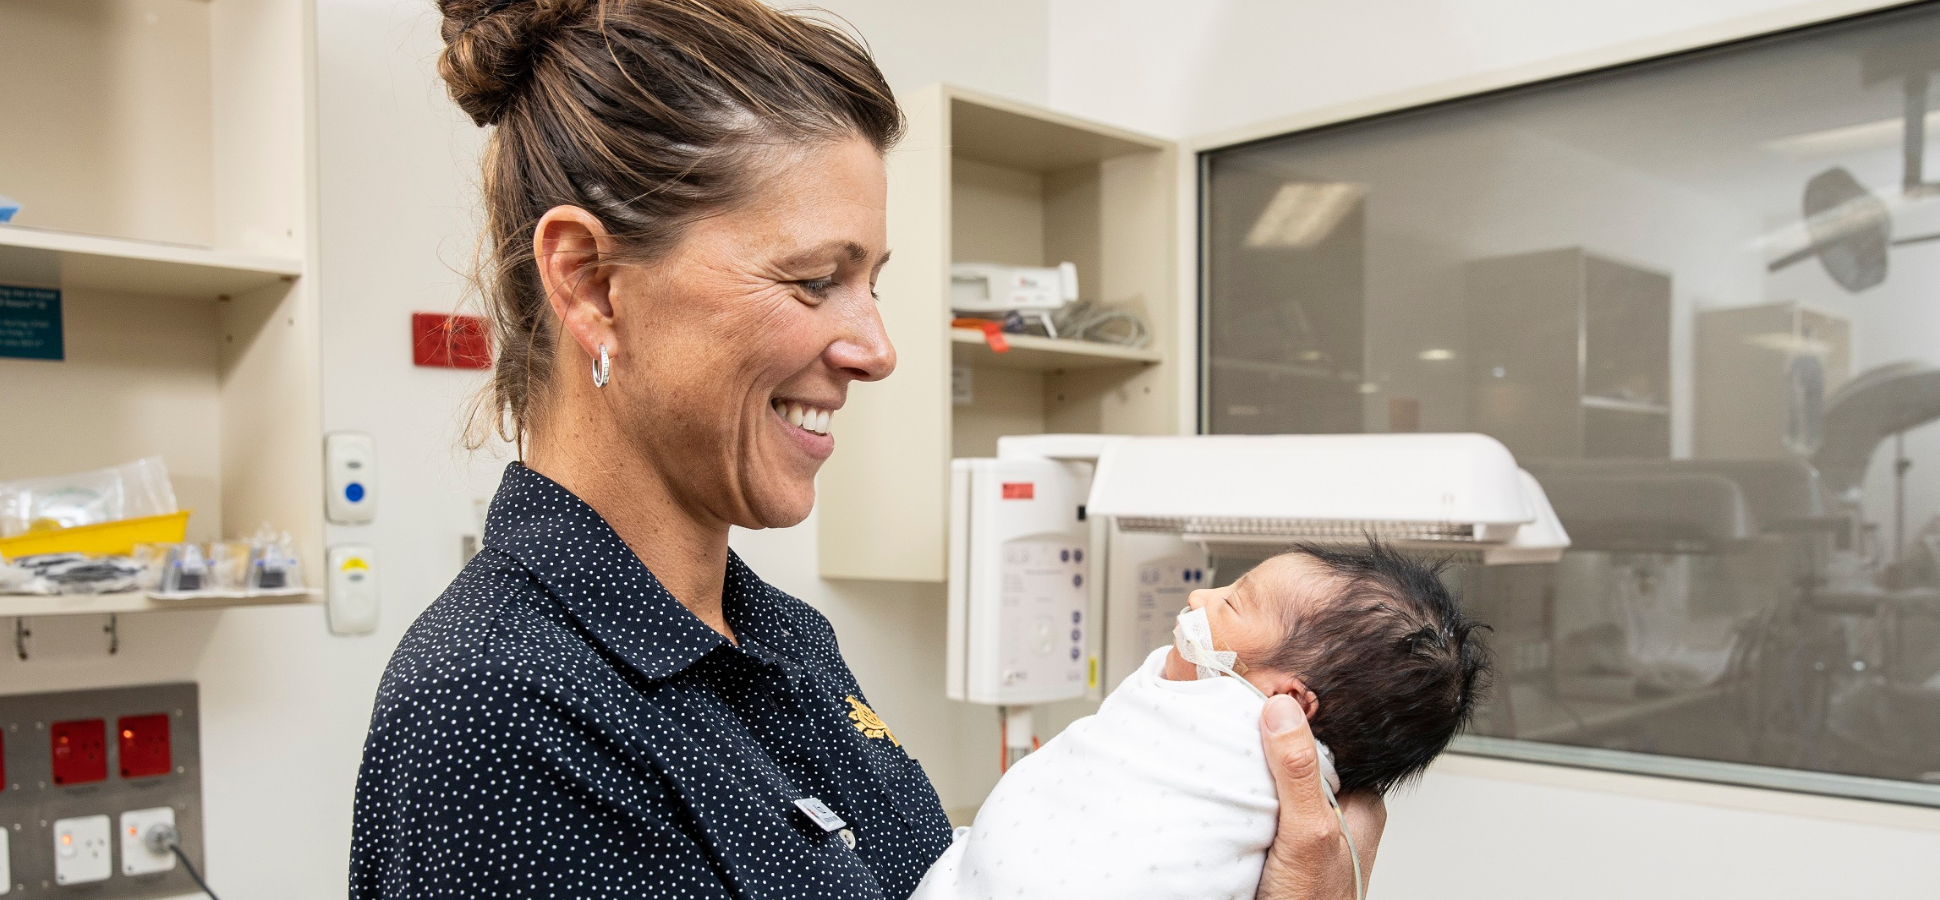 Caregiver cradling a swaddled newborn and smiling